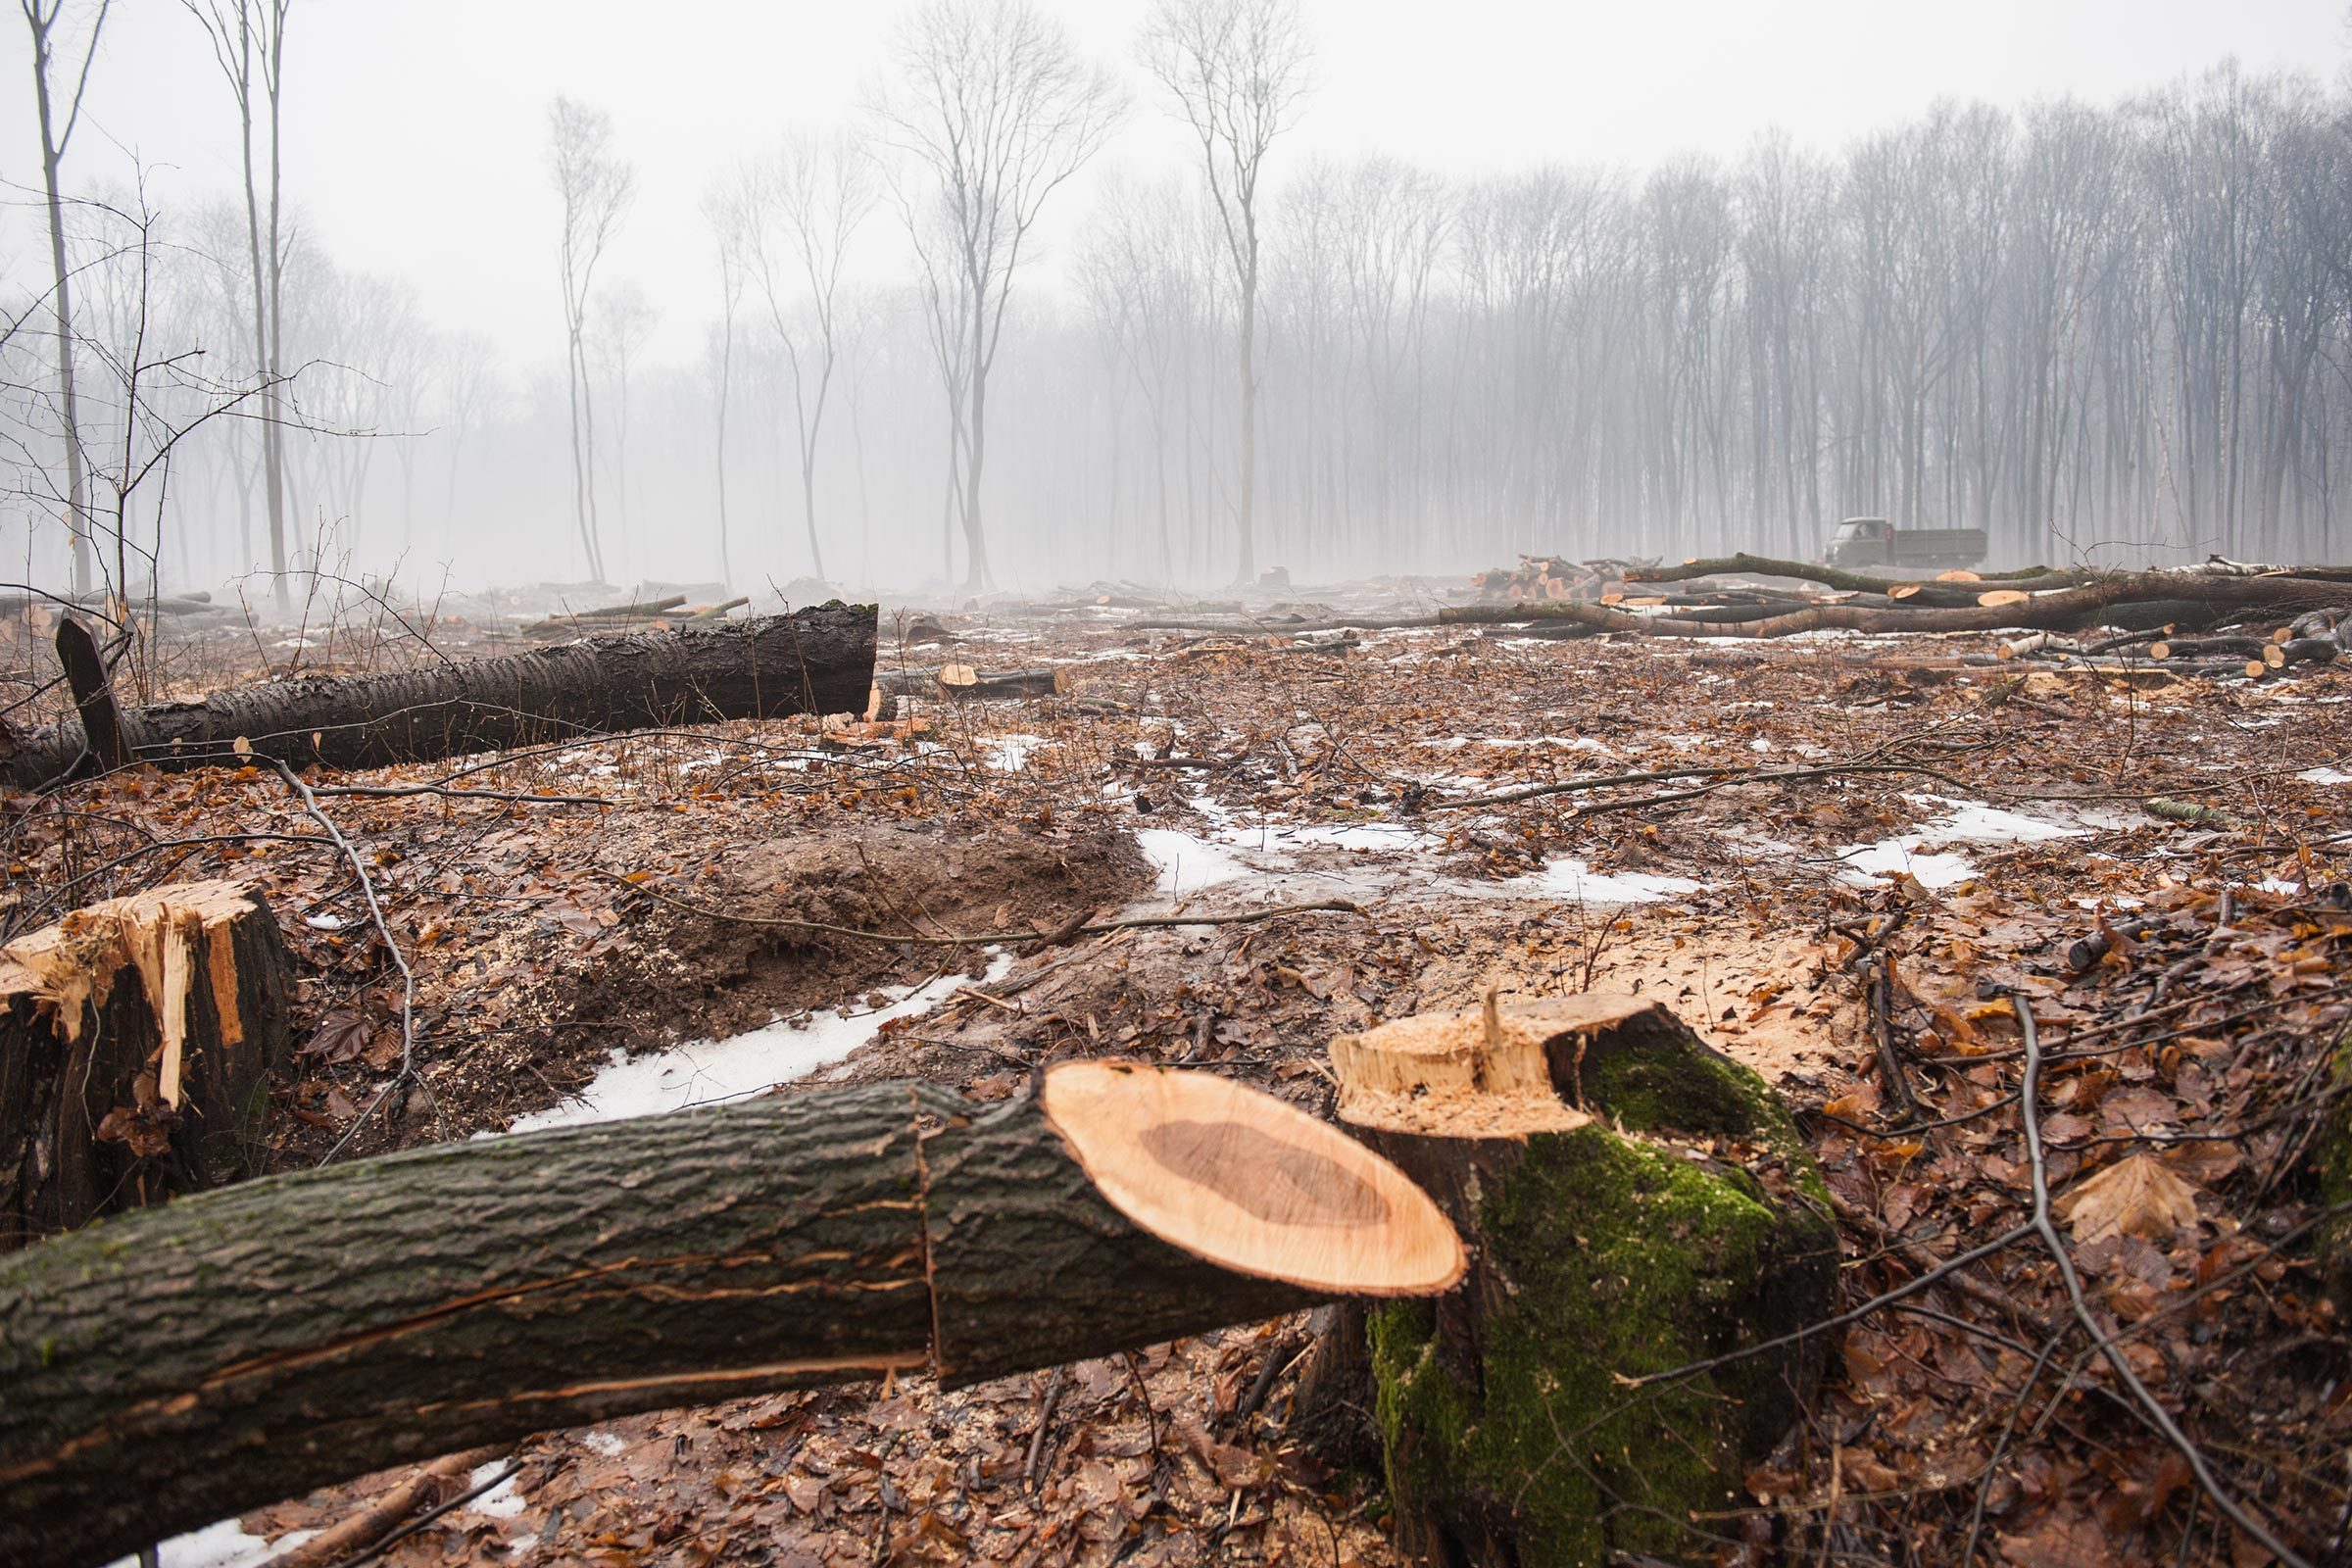 deforestation cut down trees